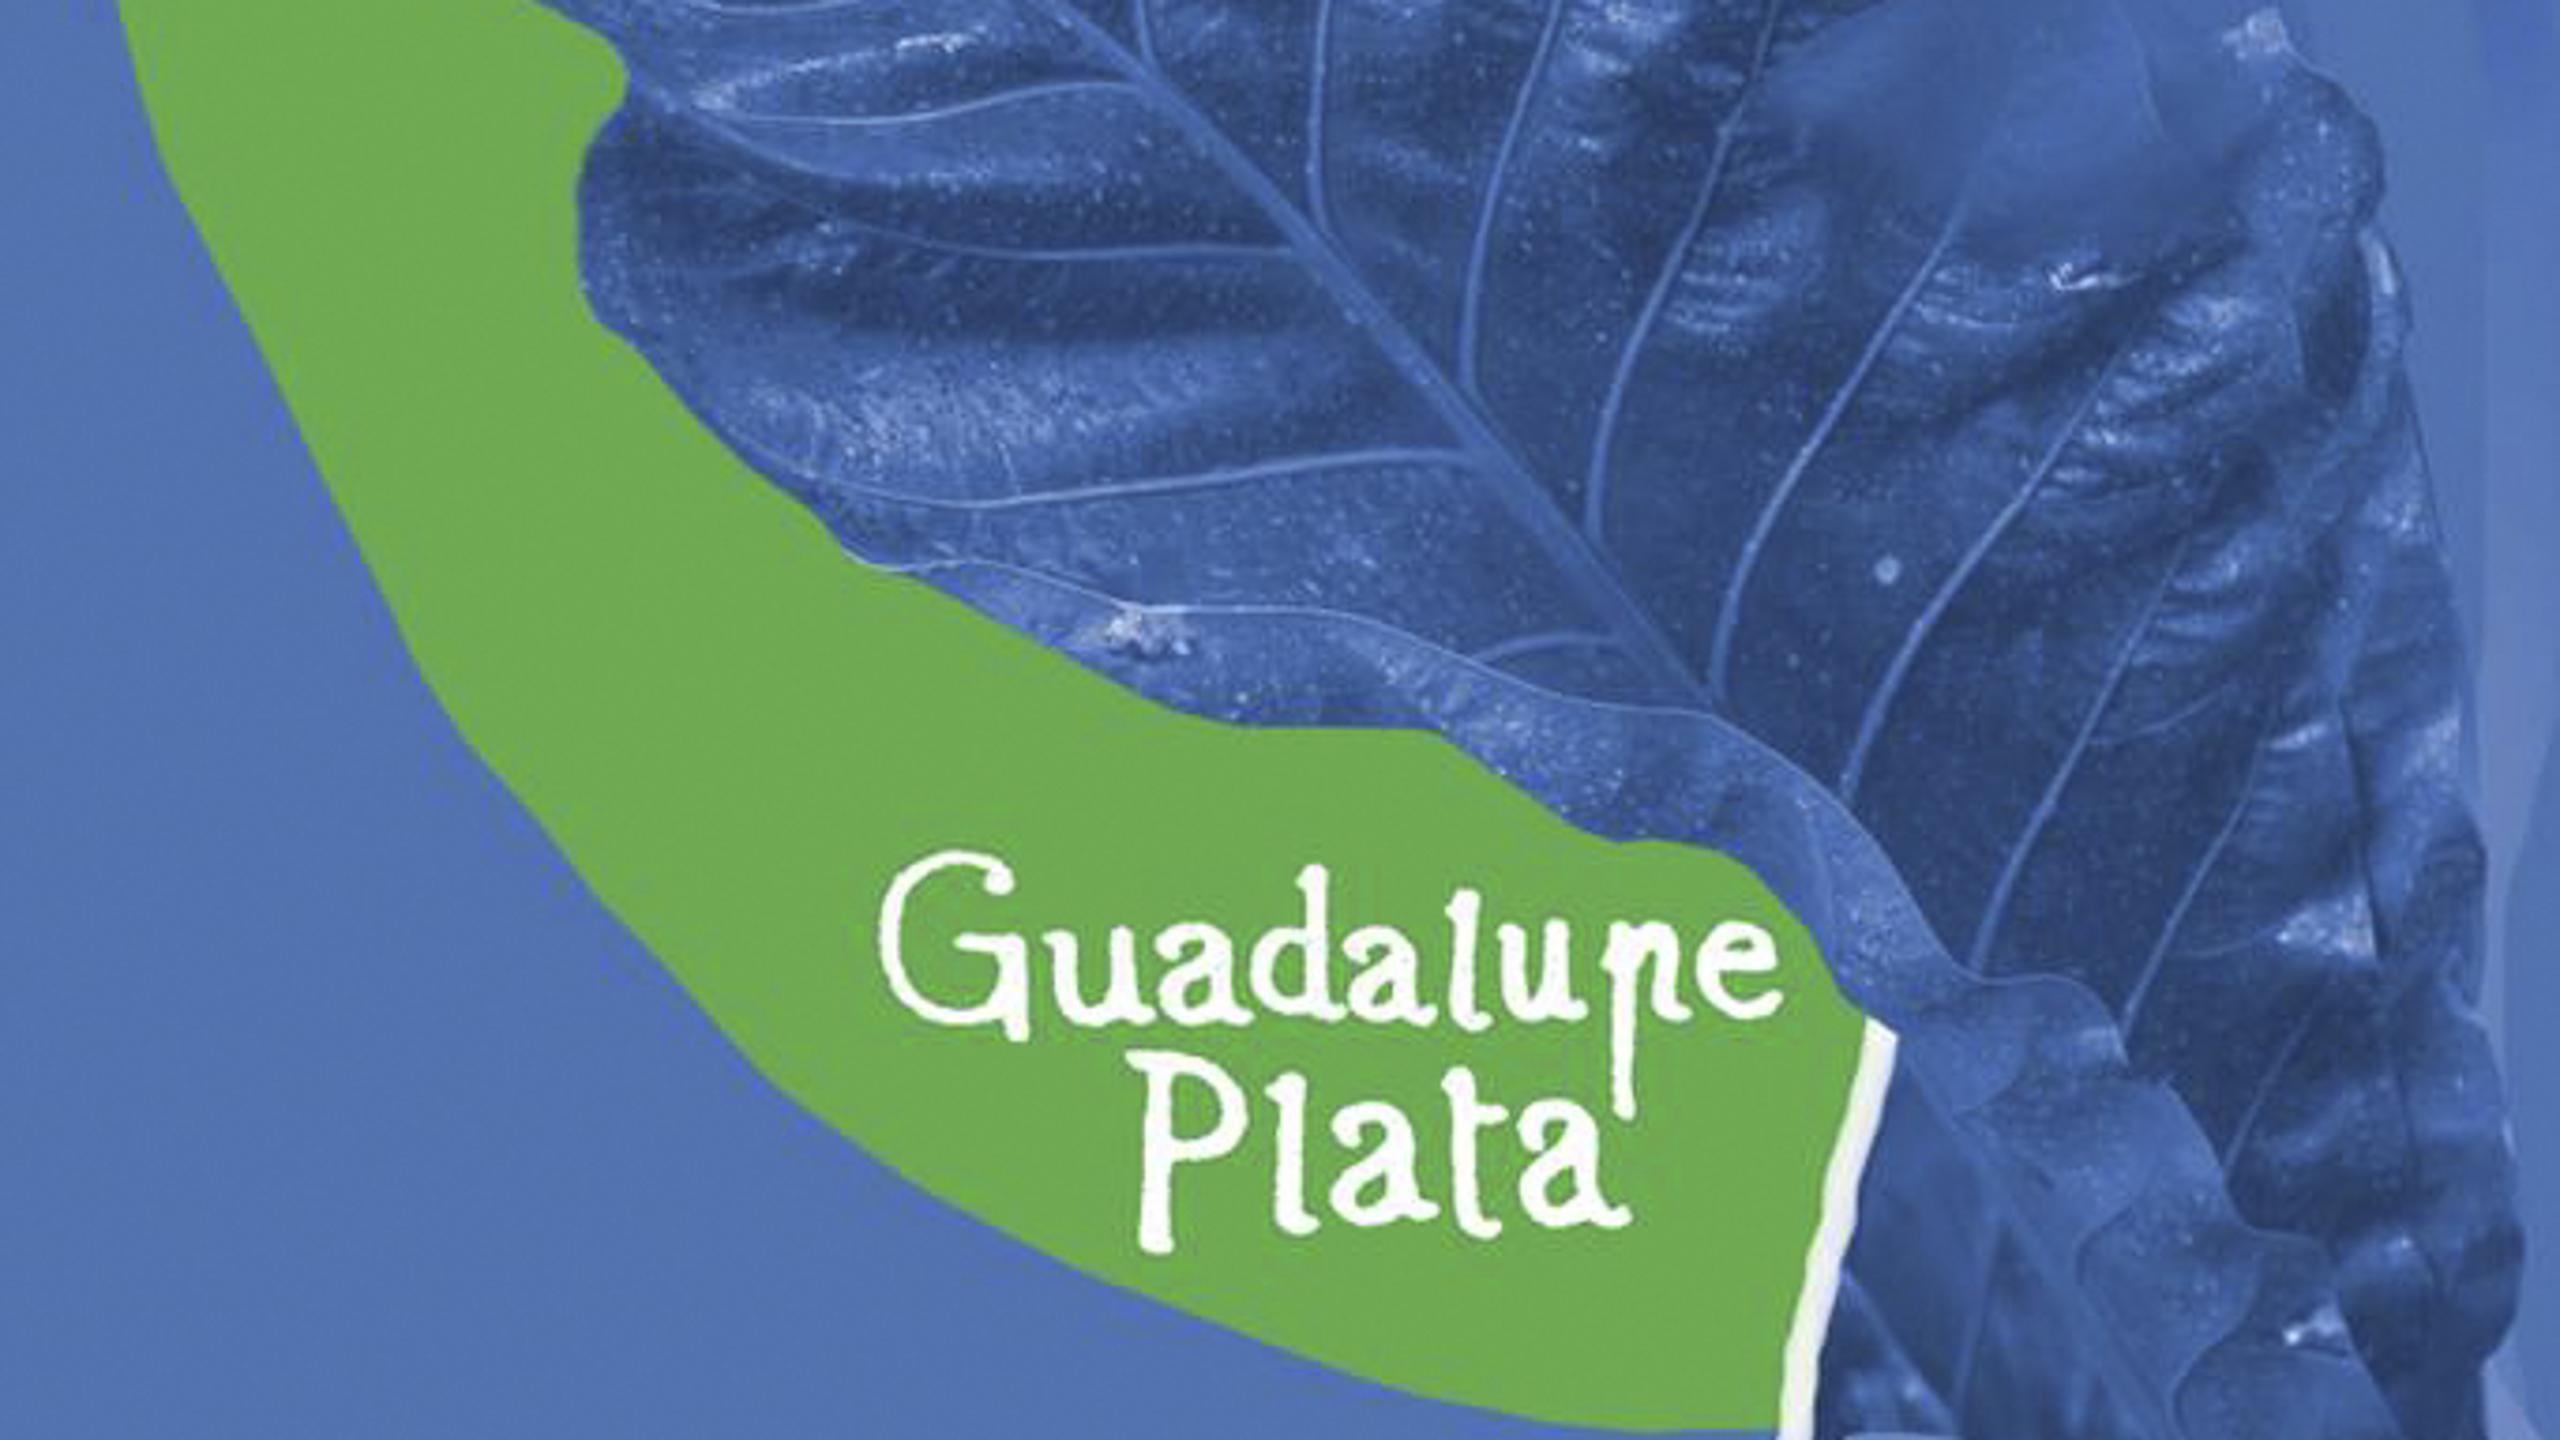 Fotografía promocional de Guadalupe Plata en Sons al Botànic